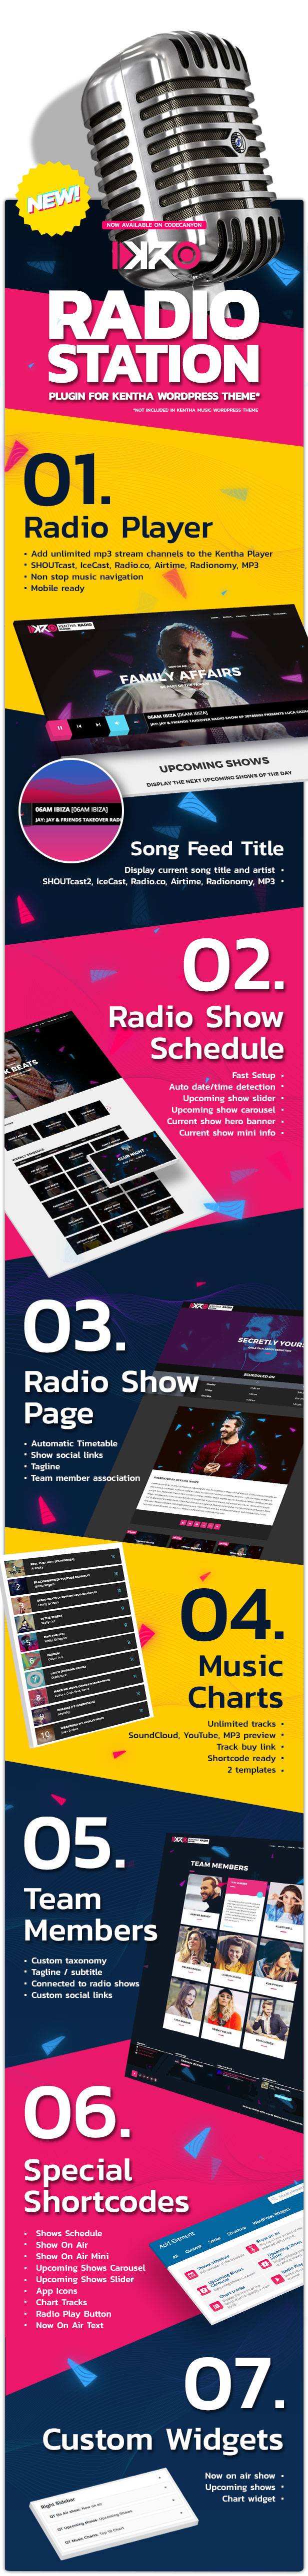 KenthaRadio - Addon for Kentha Music WordPress Theme To Add Radio Station and Schedule Functionality - 5